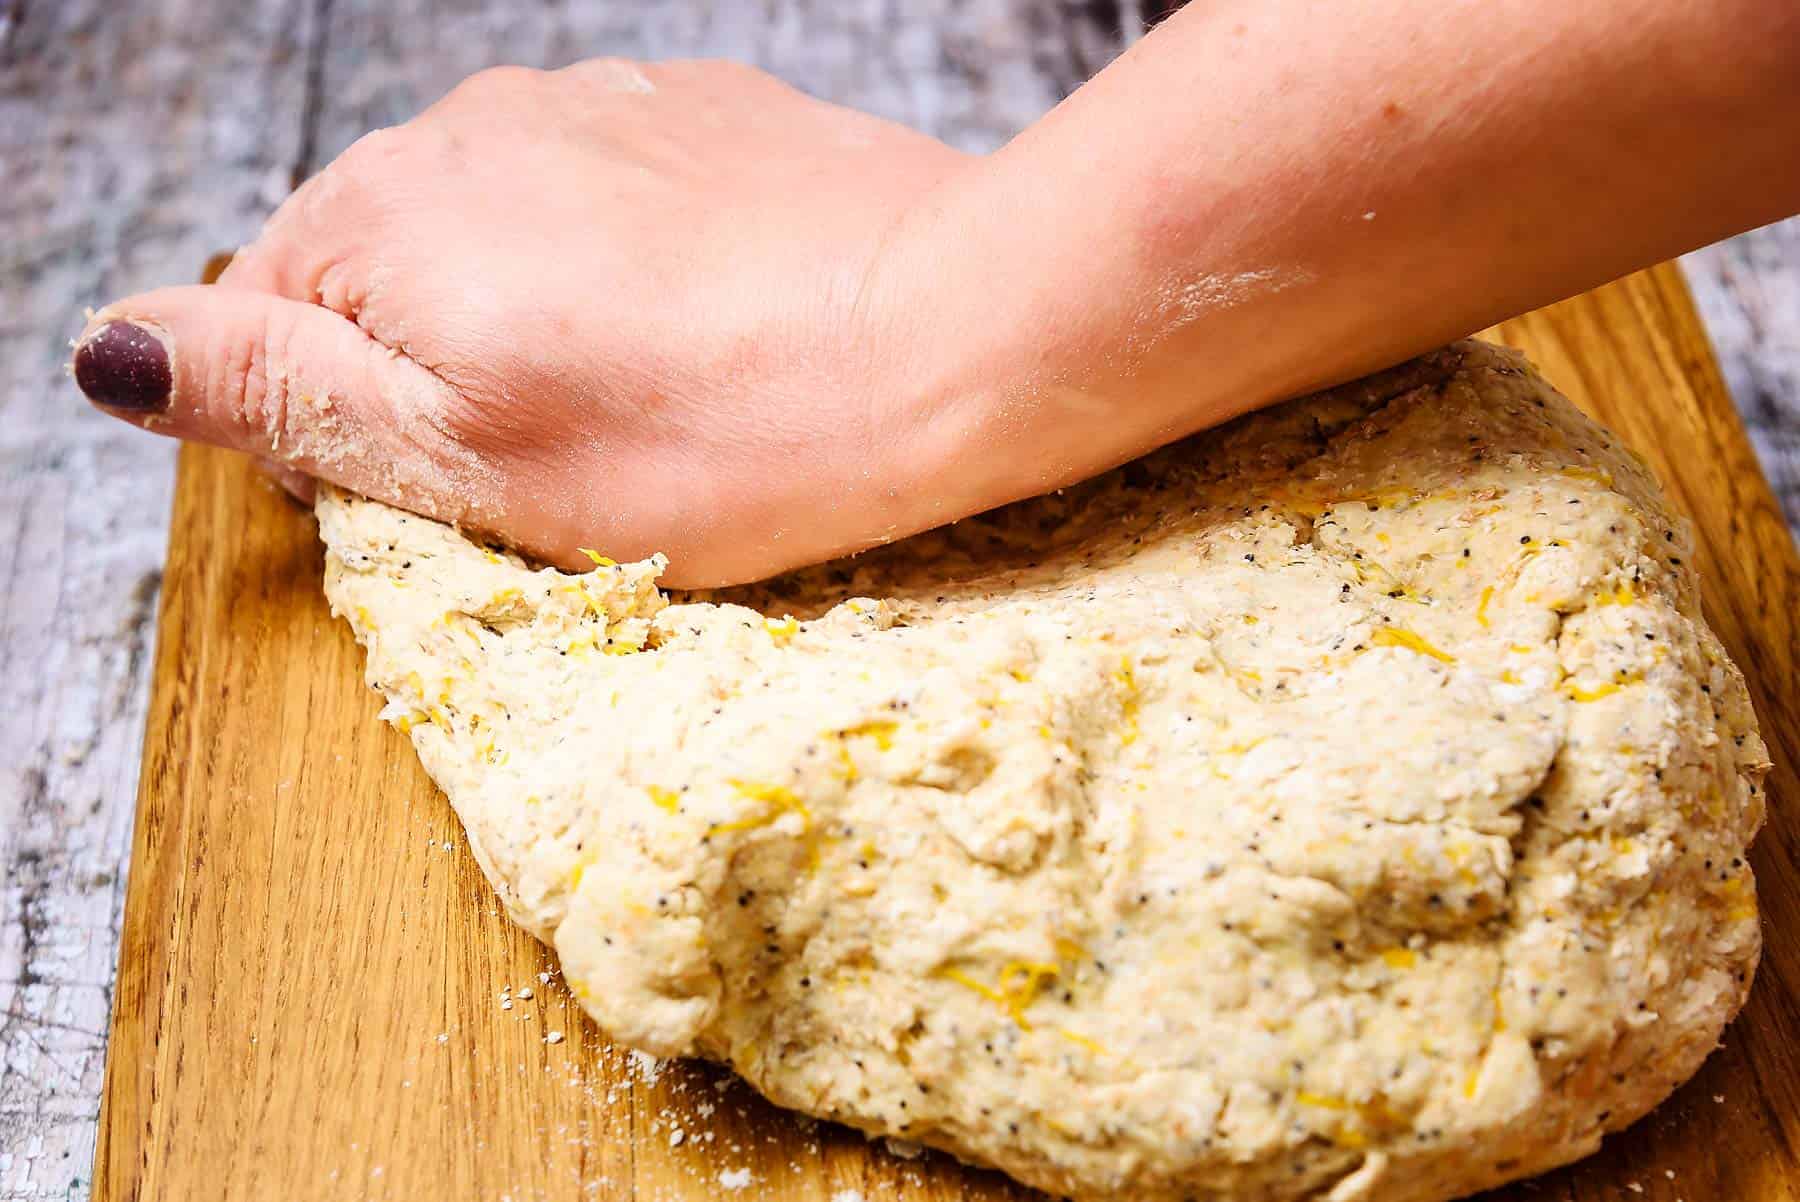 Kneading the bread dough